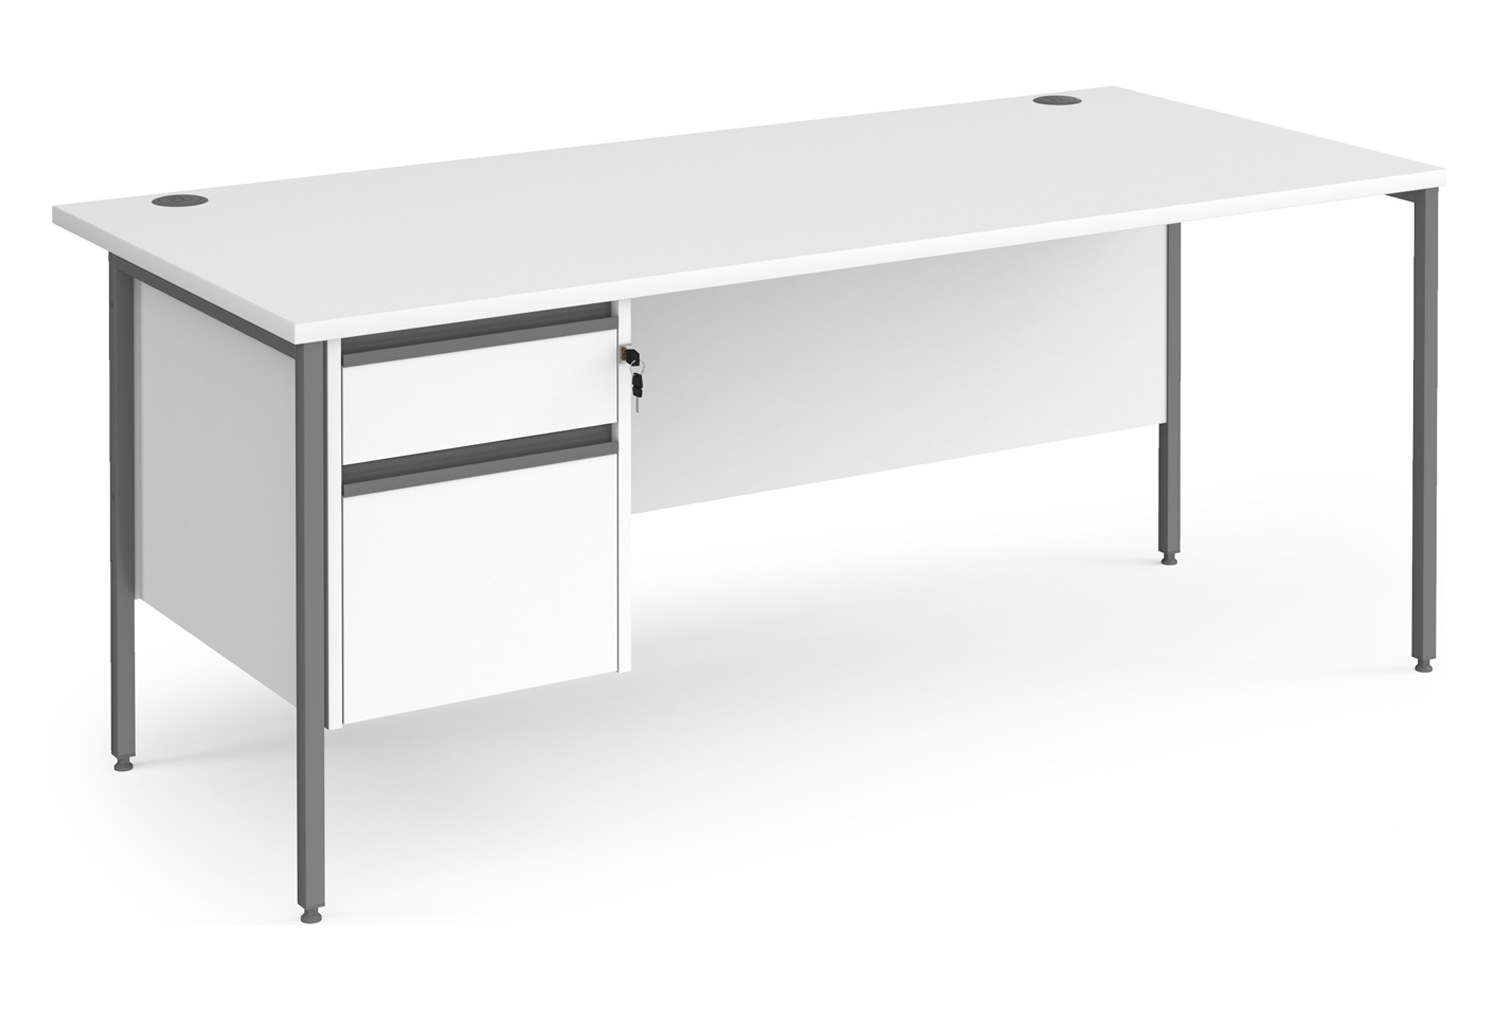 Value Line Classic+ Rectangular H-Leg Office Desk 2 Drawers (Graphite Leg), 180wx80dx73h (cm), White, Express Delivery